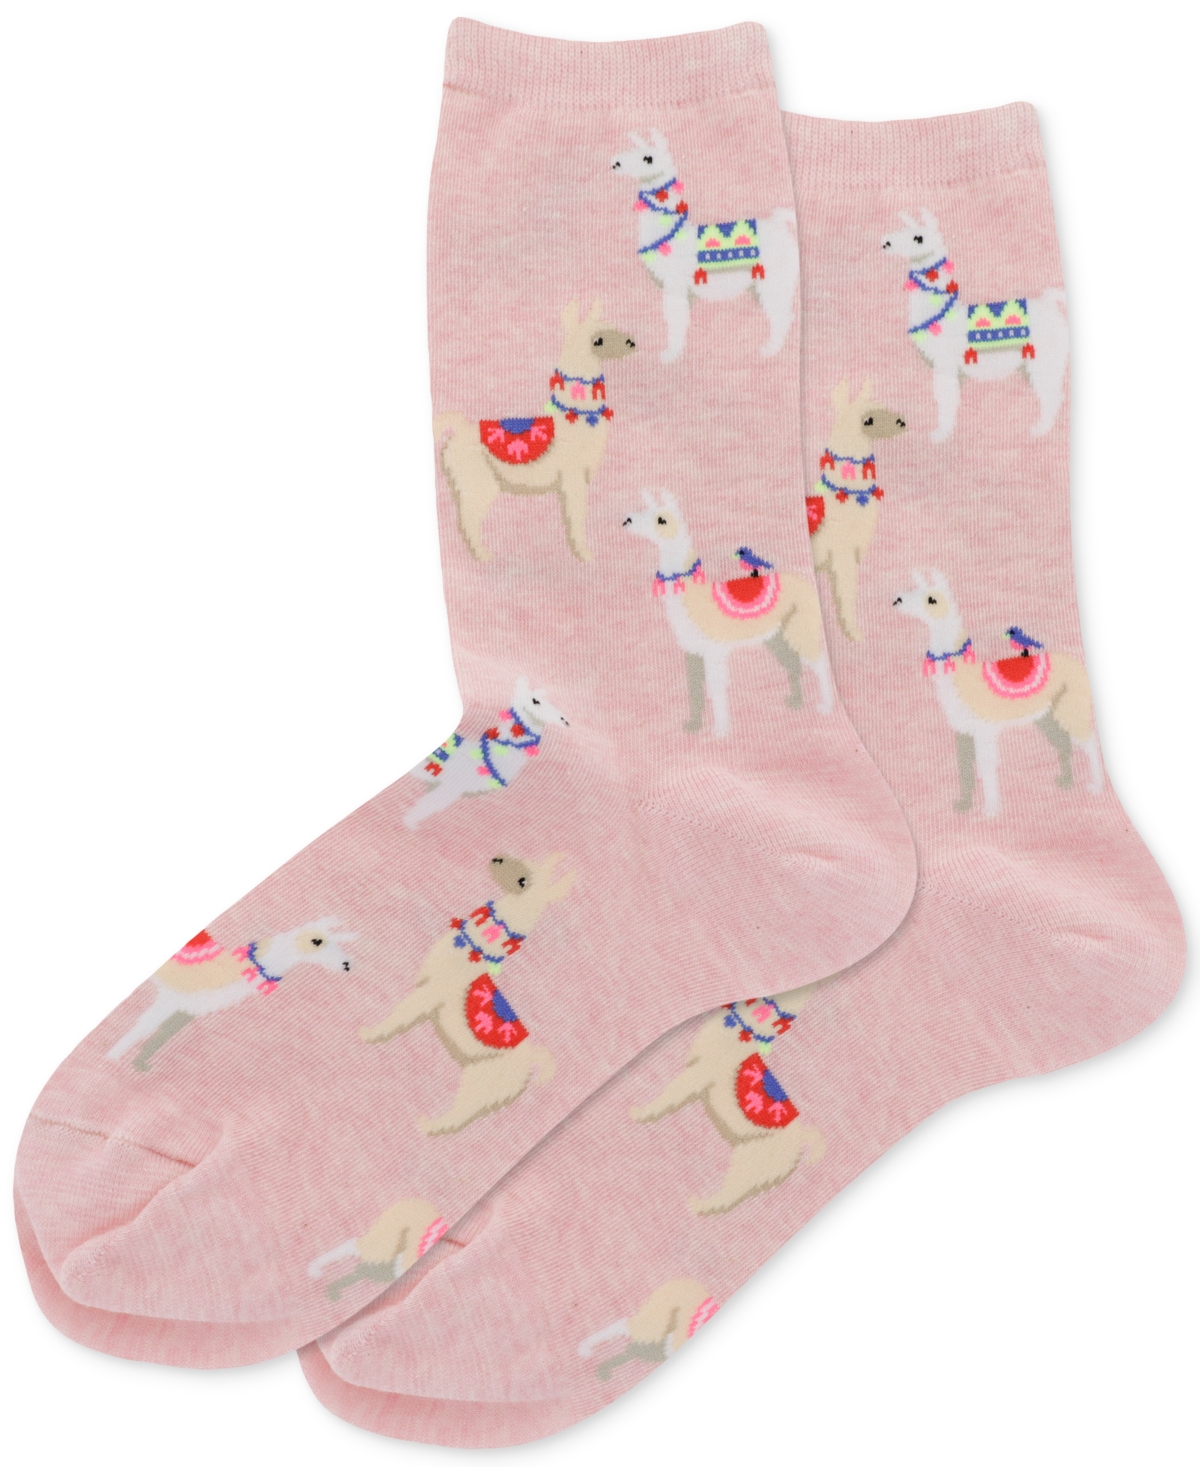 Women's Alpacas Printed Knit Crew Socks - Pink Heather